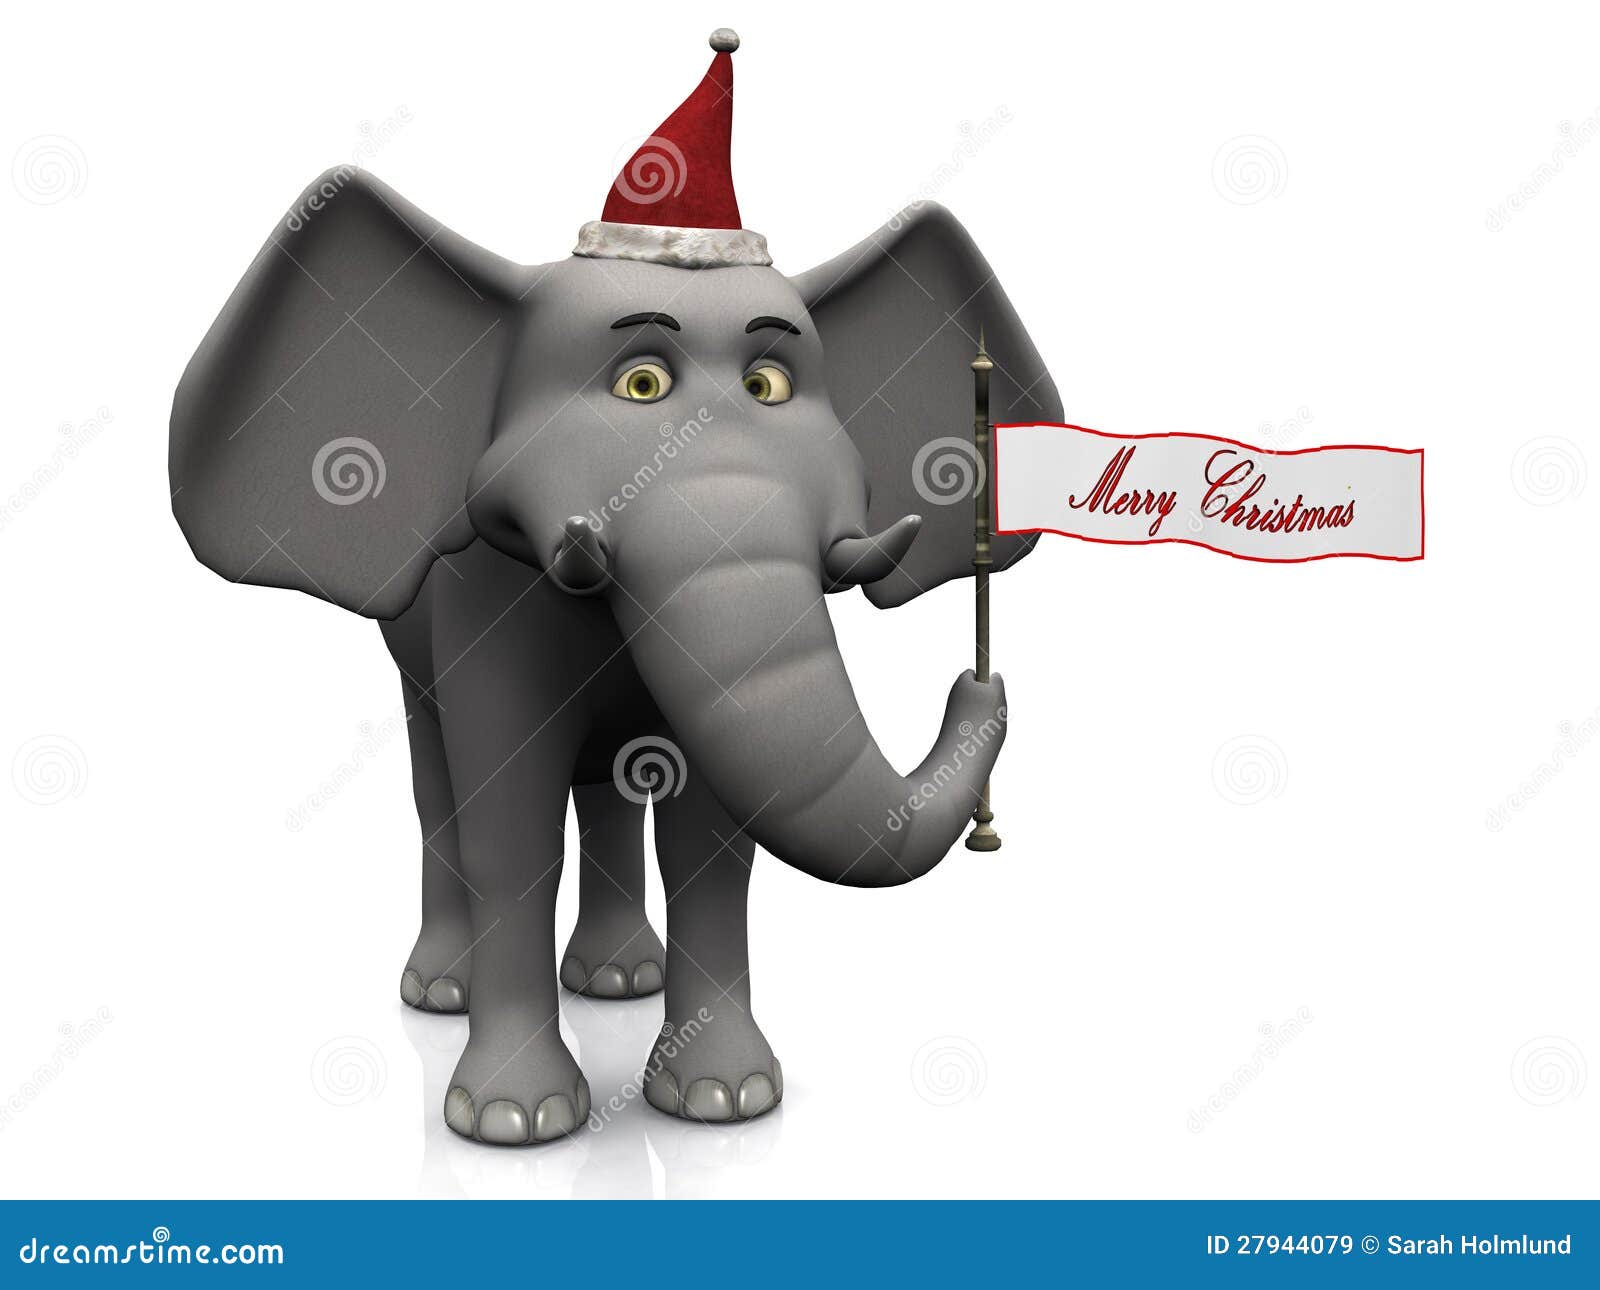 christmas elephant clip art - photo #24